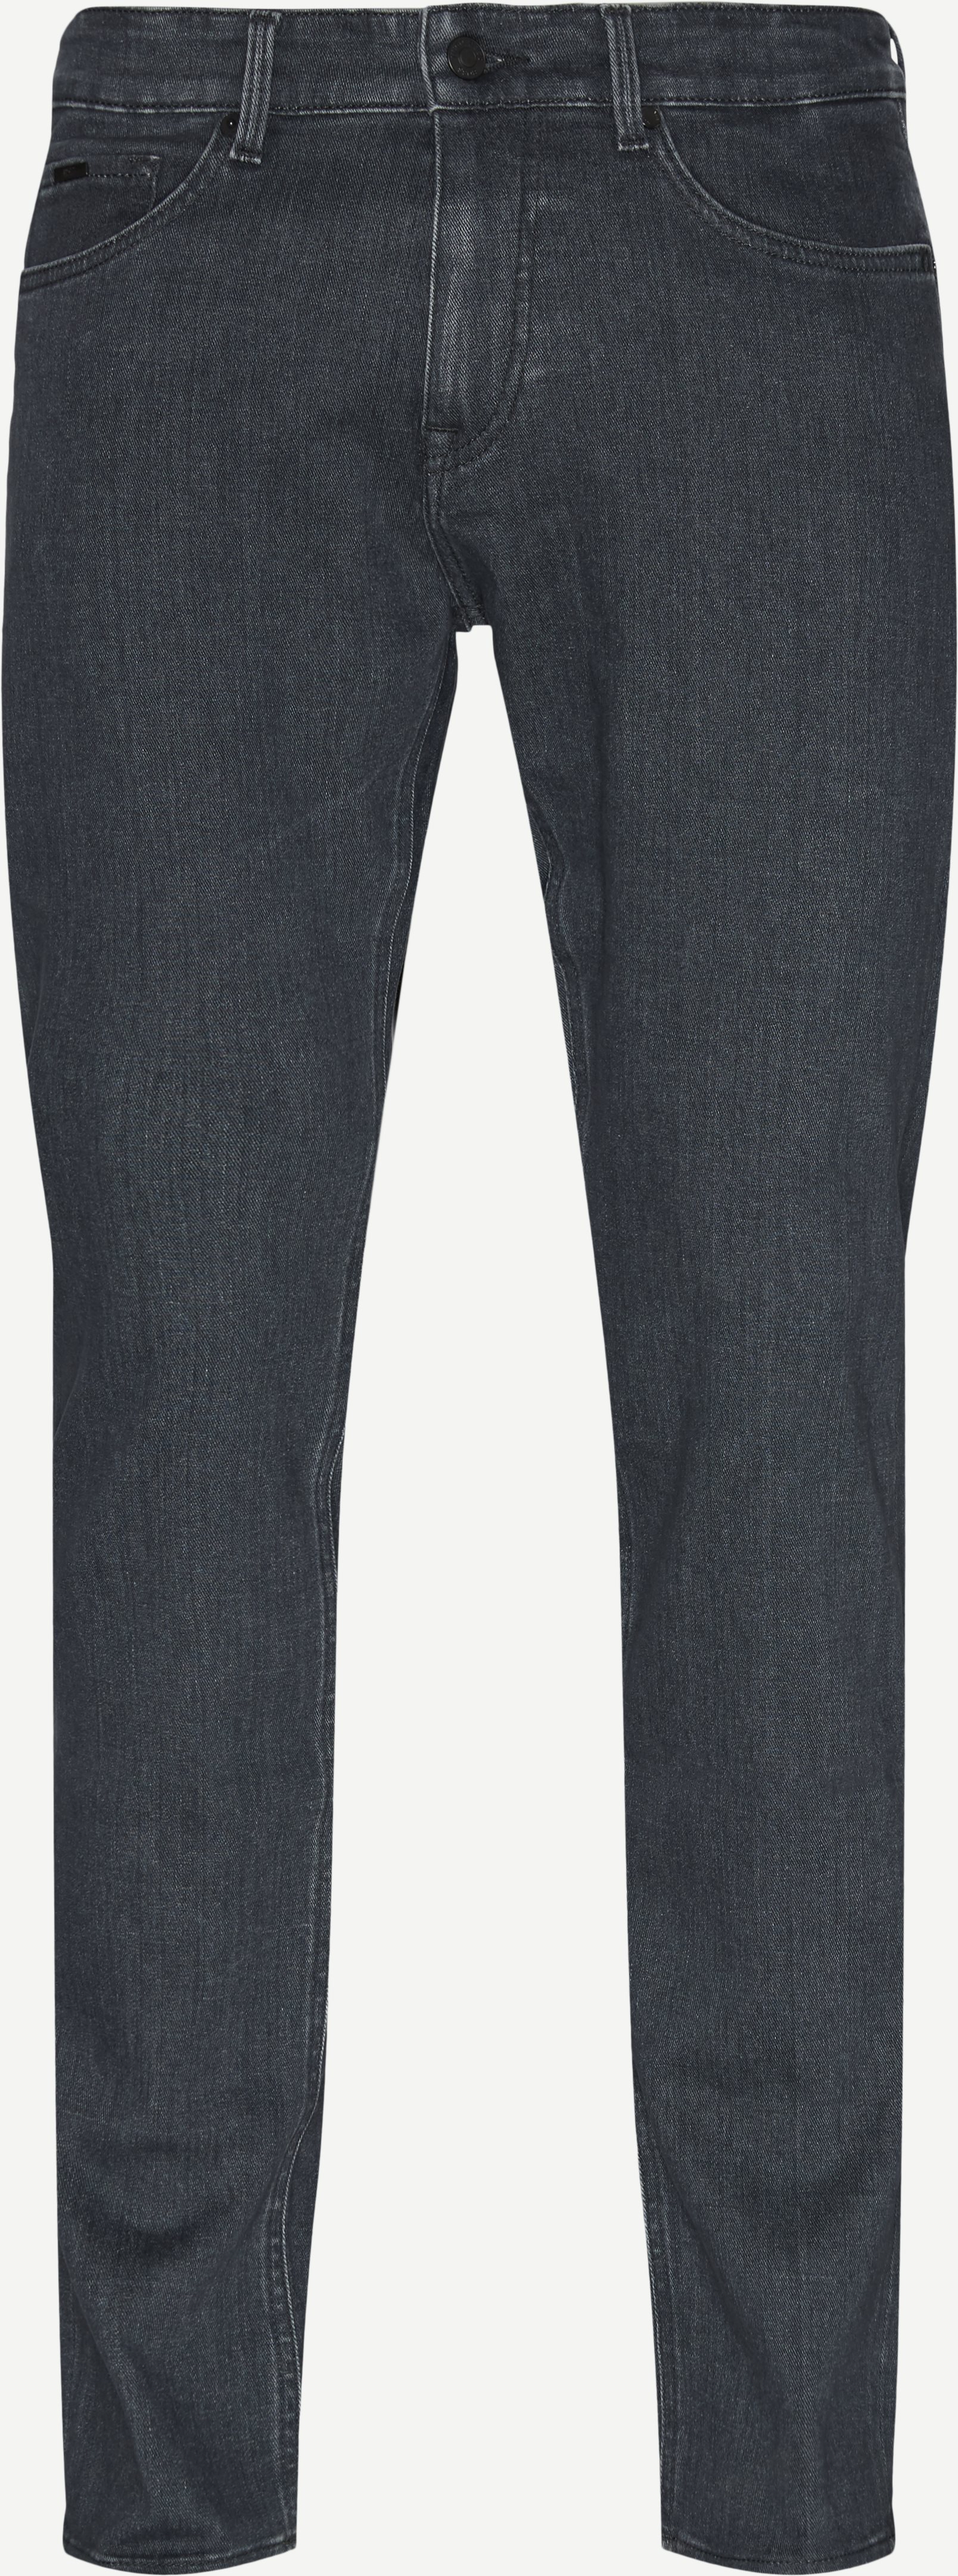 Delaware3-1 + jeans - Jeans - Slim fit - Grå